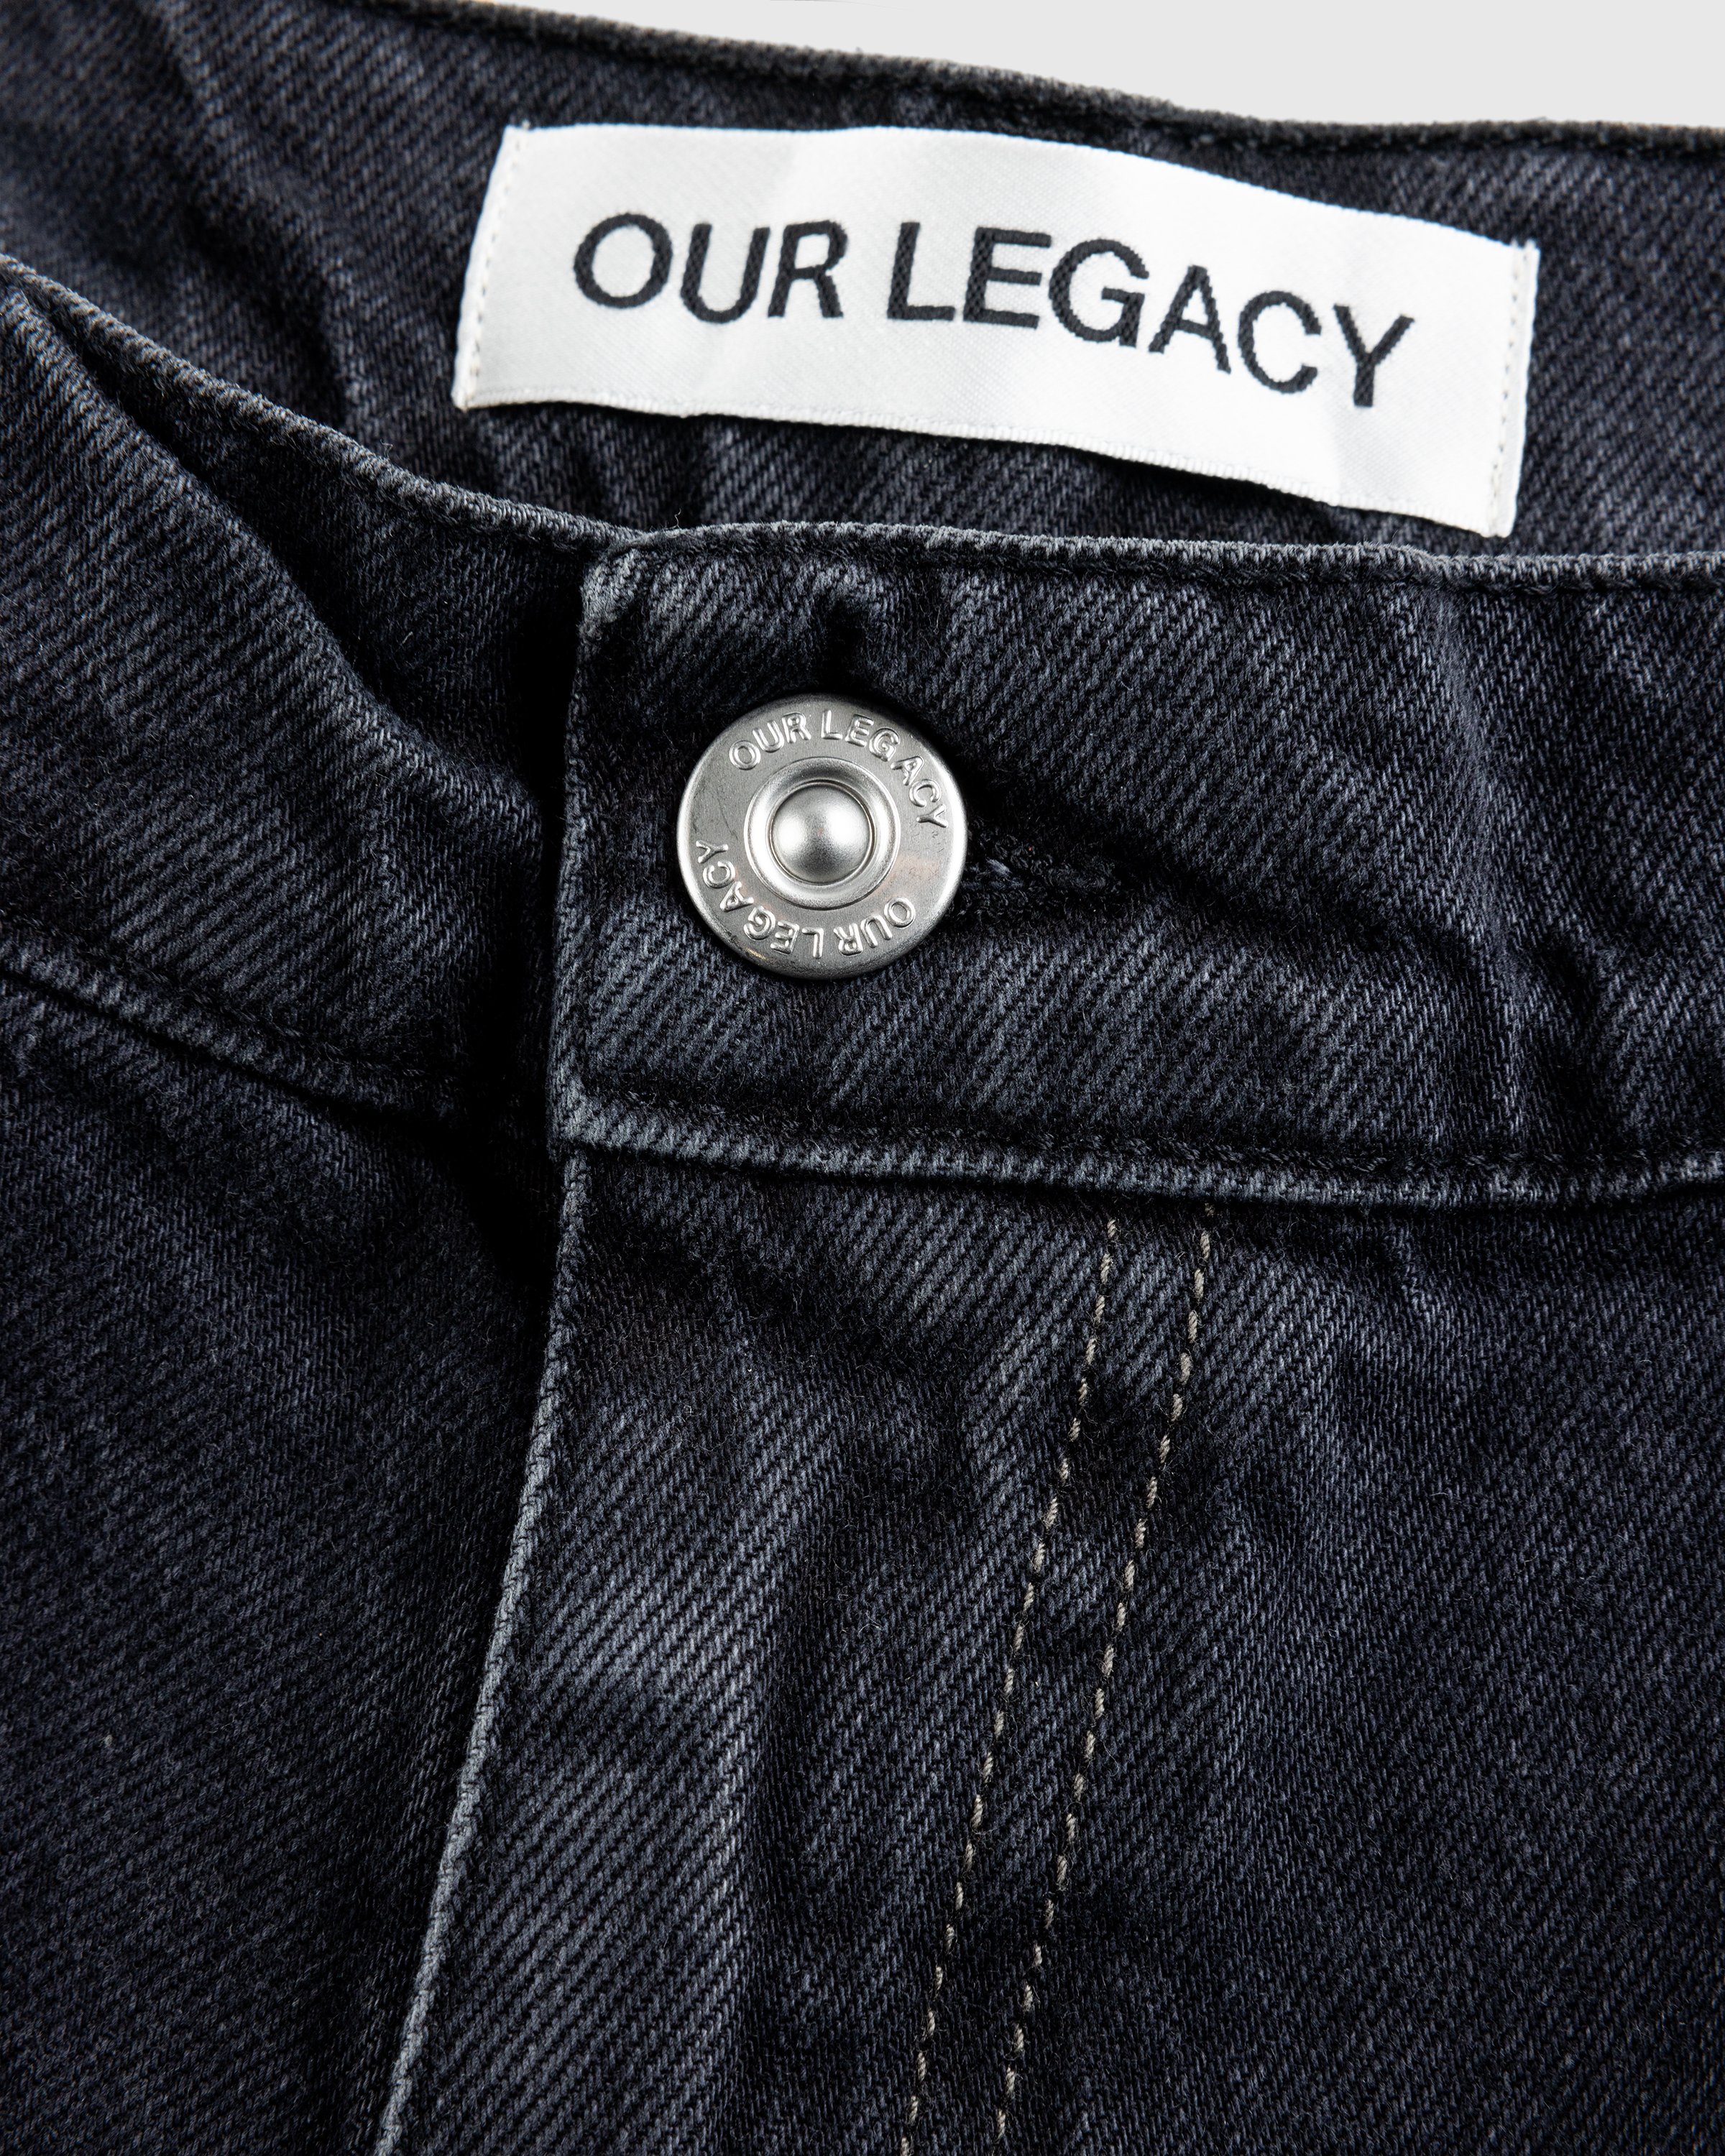 Our Legacy - Vast Cut Washed Black Denim - Clothing - Black - Image 6